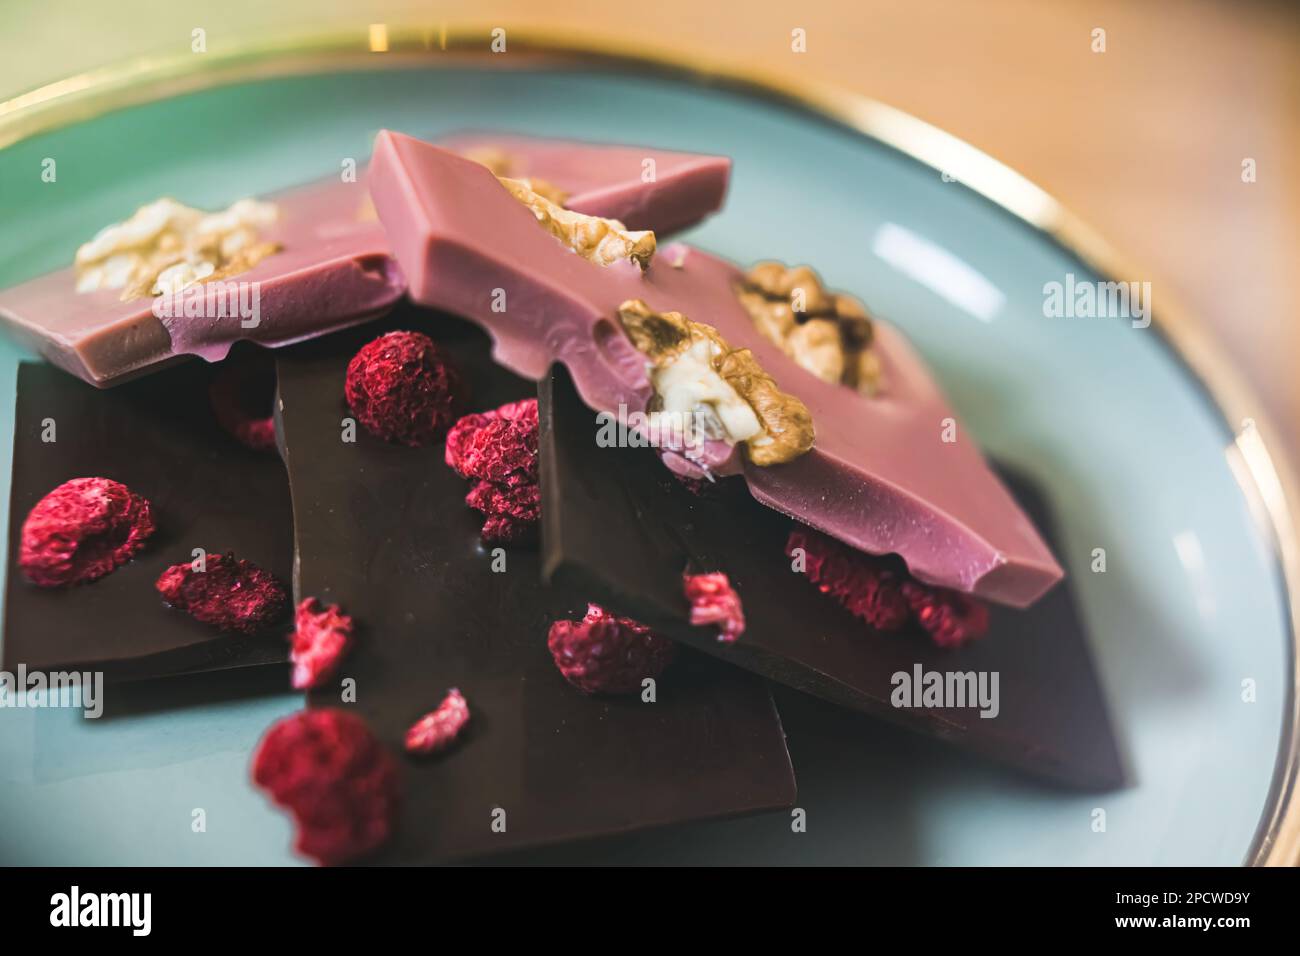 Ruby Raspberry Pistachio Chocolate Bar